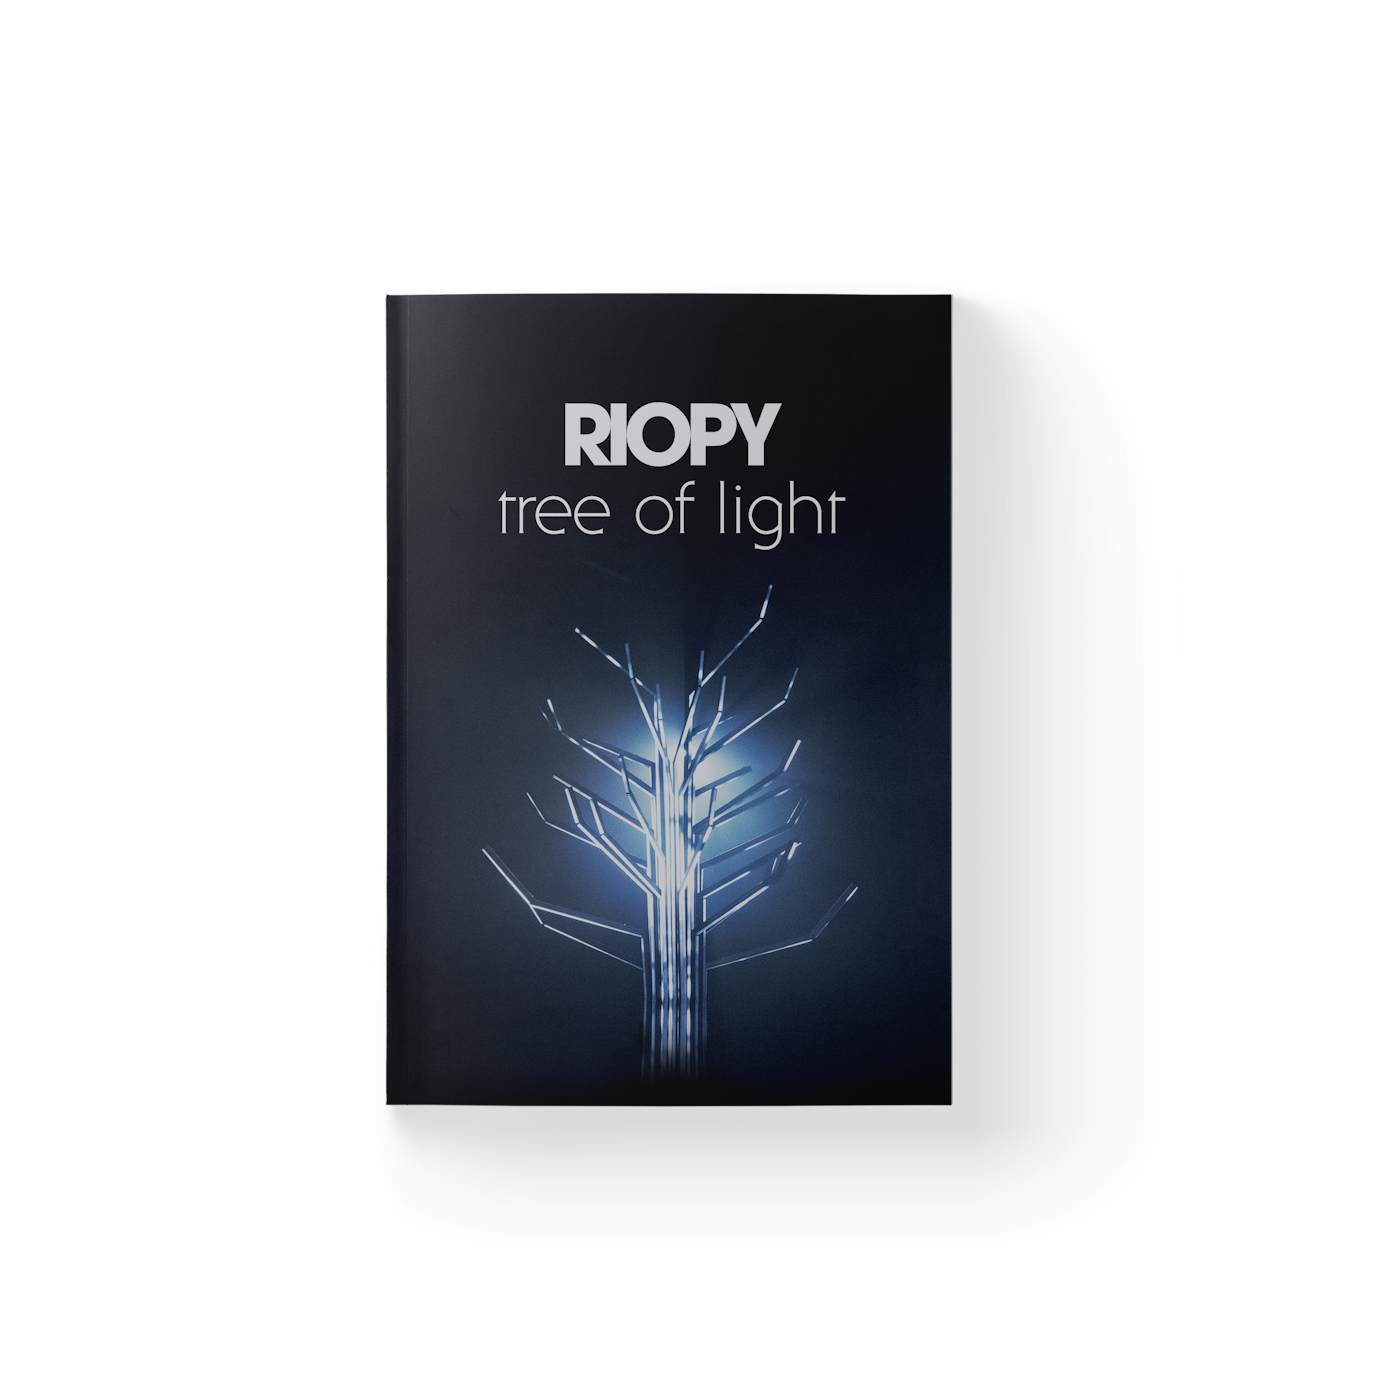 RIOPY Tree Of Light Sheet Music Book